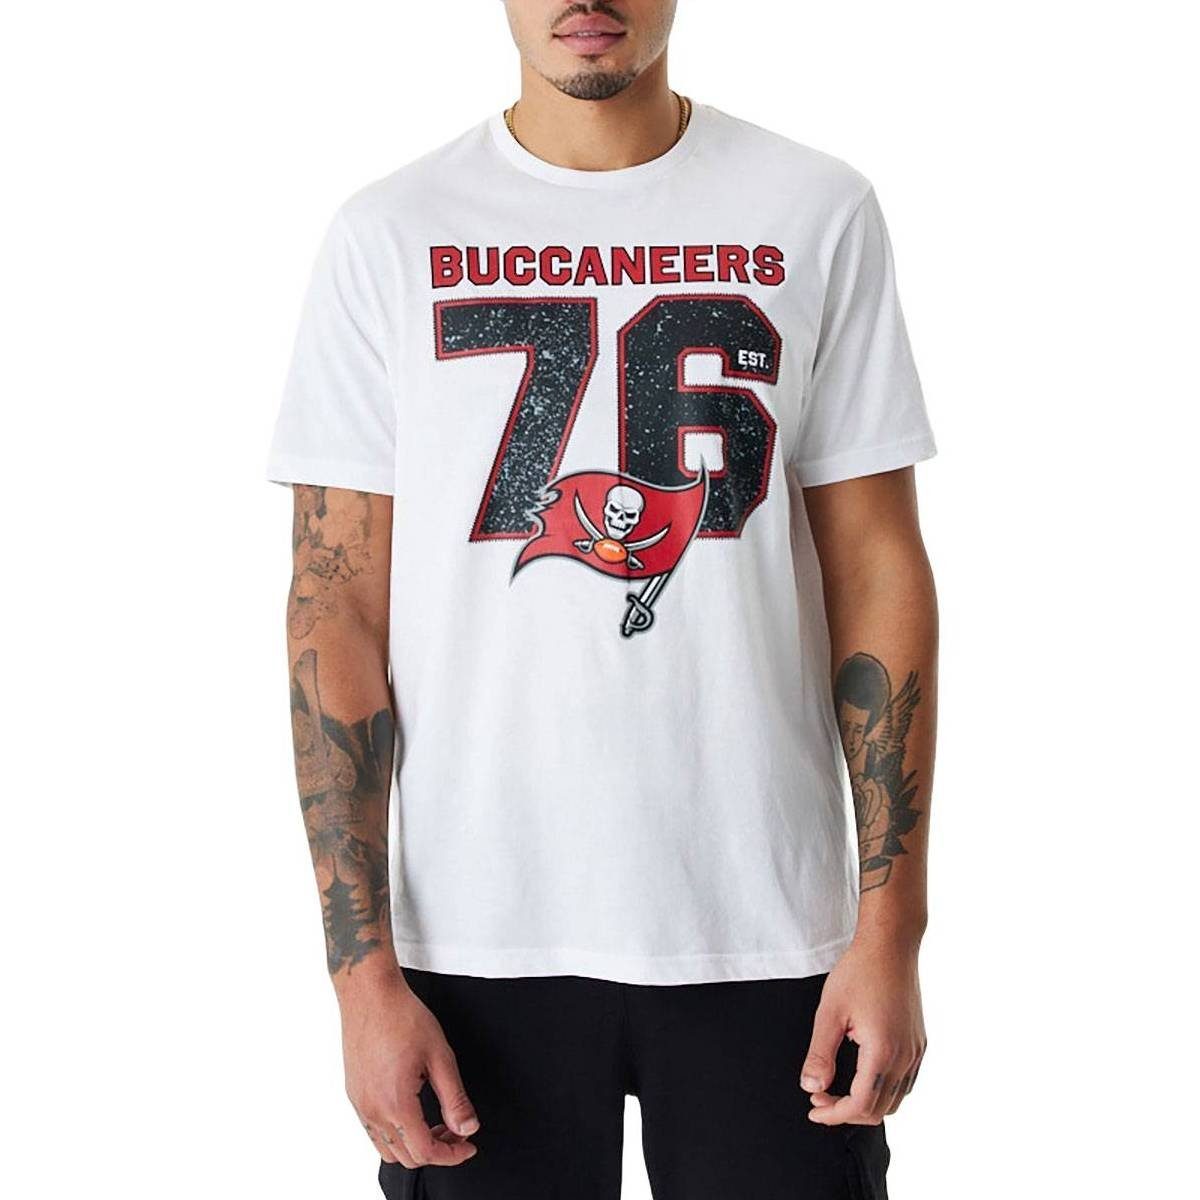 T-Shirt New Wordmark New Buccaneers NFL Era Era T-Shirt Tampa Bay